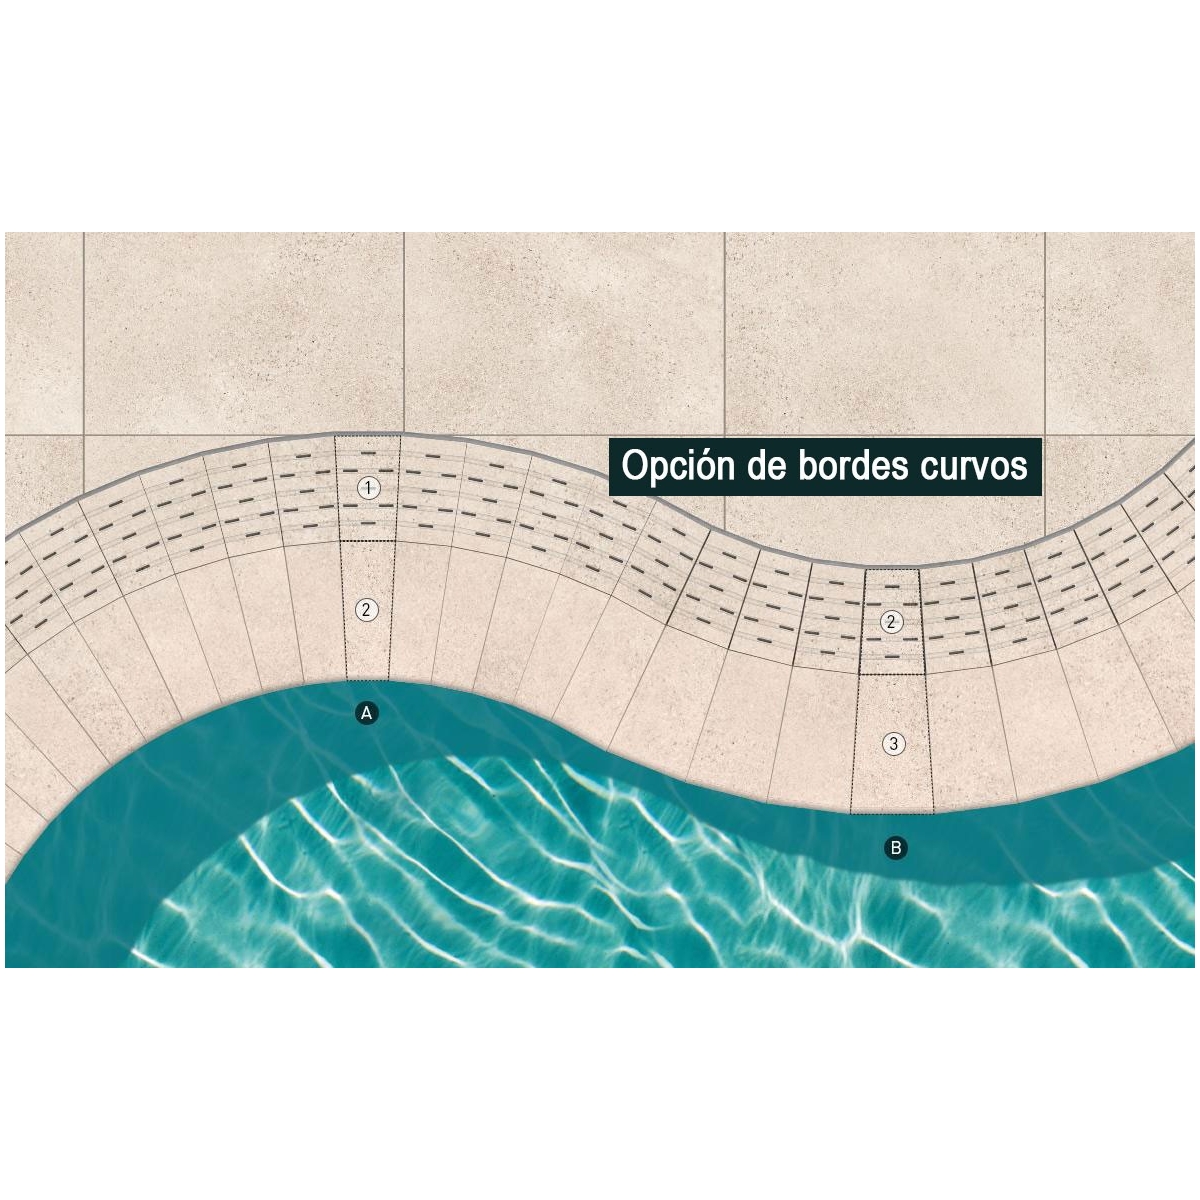 Cobertura de piscina barata Creta Cements Warm - Cerámicas Mayor